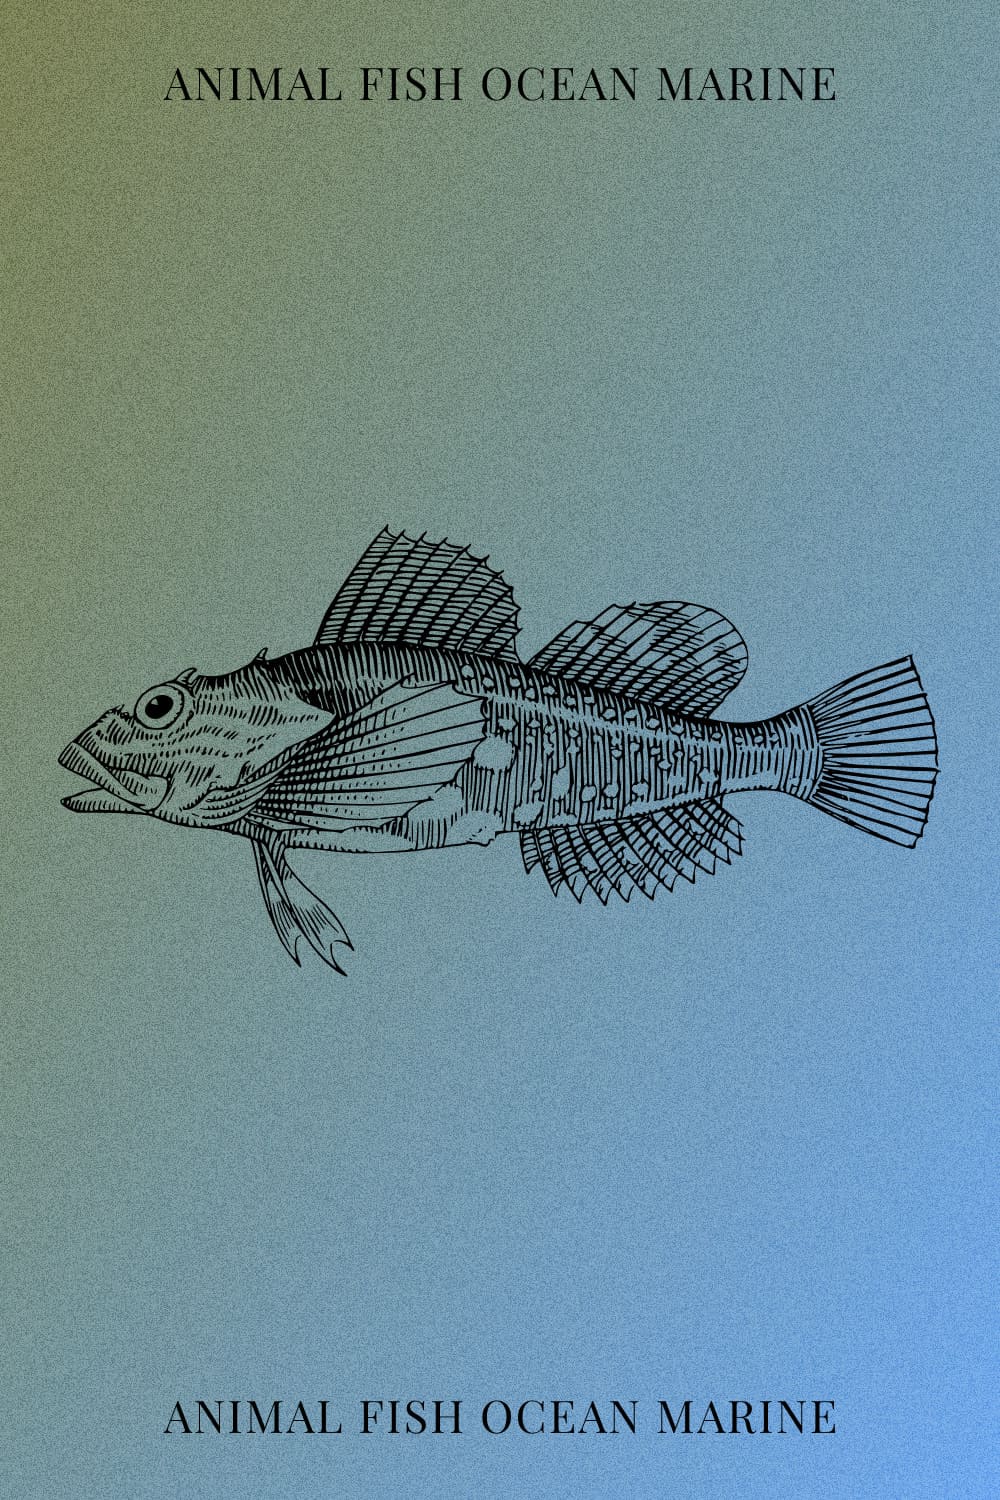 Animal Fish Ocean Marine - Pinterest Image.